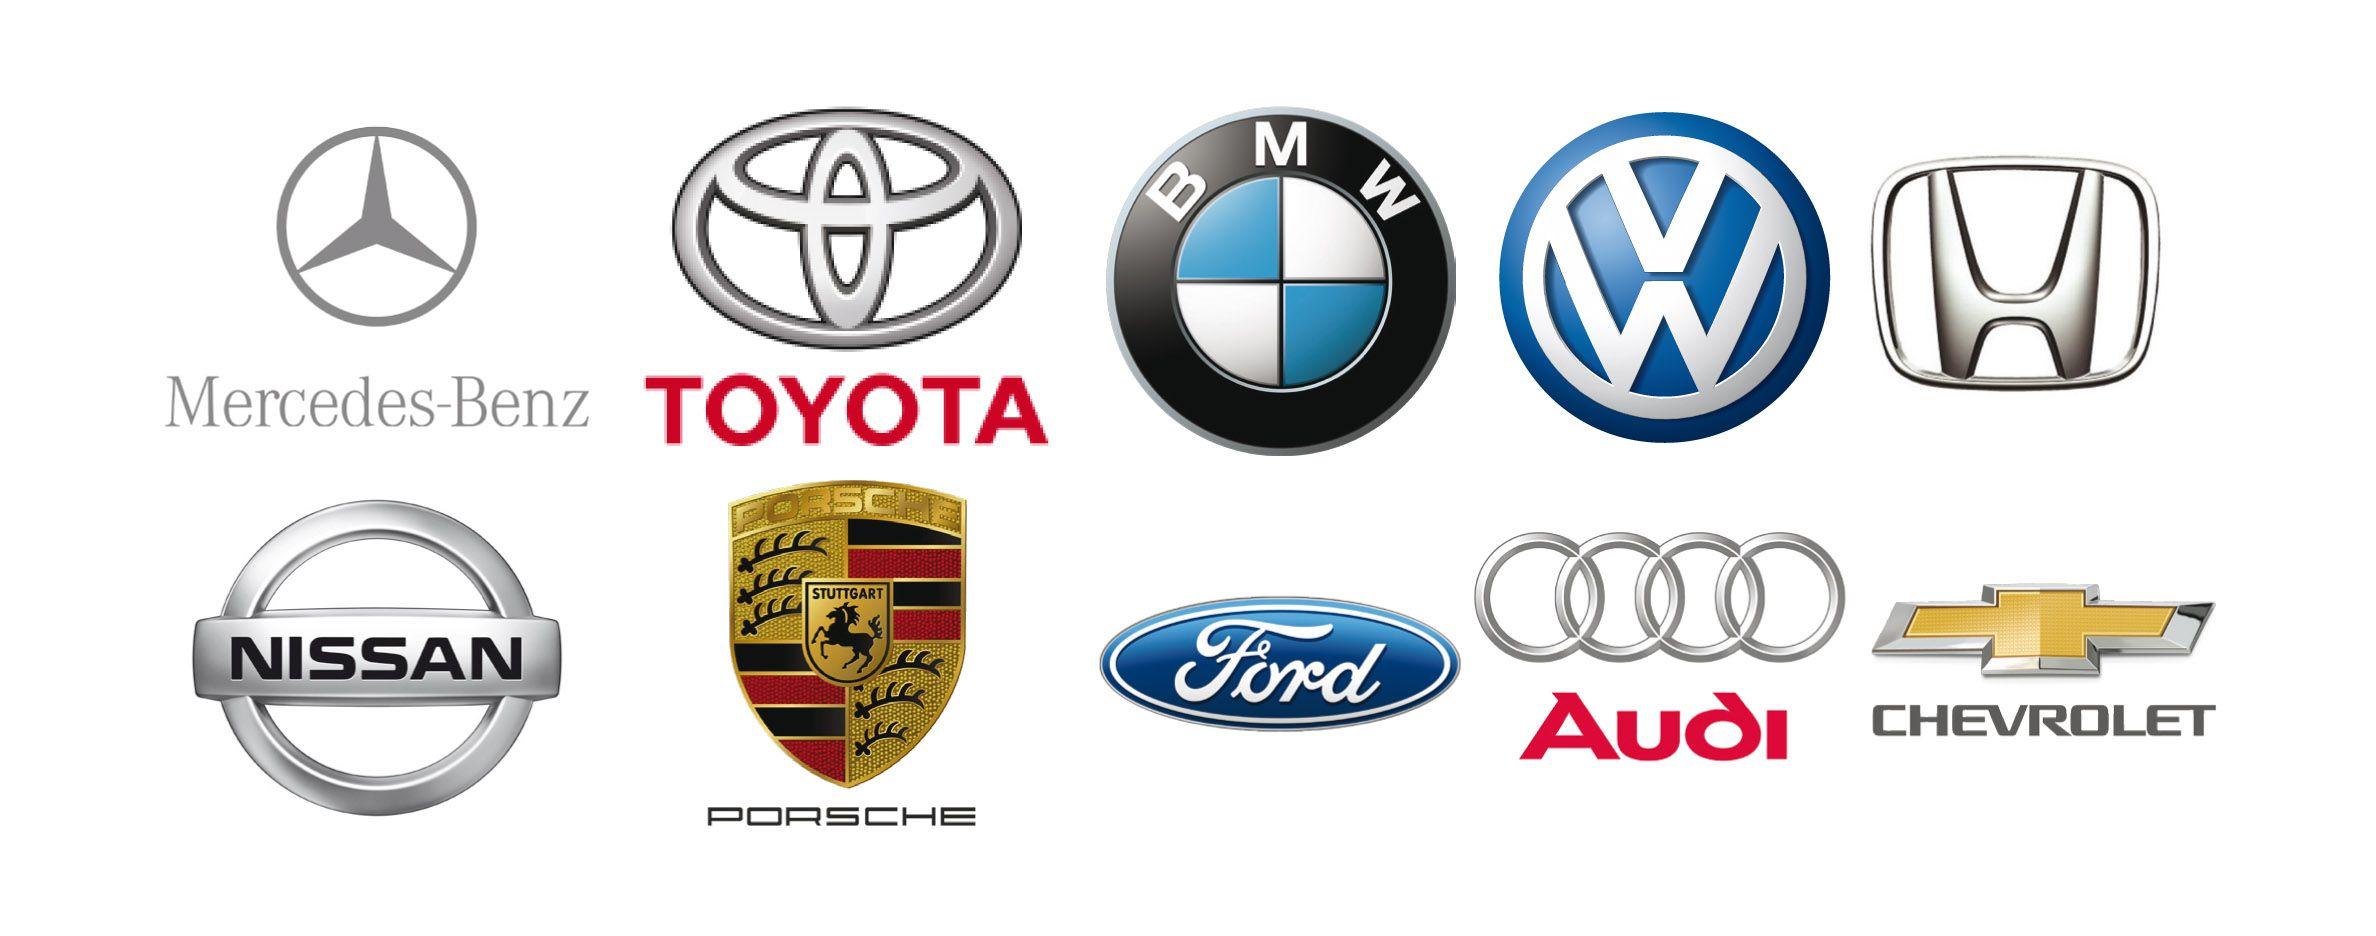 Car Maker Logo - Mercedes-Benz is 2018's most valuable car brand